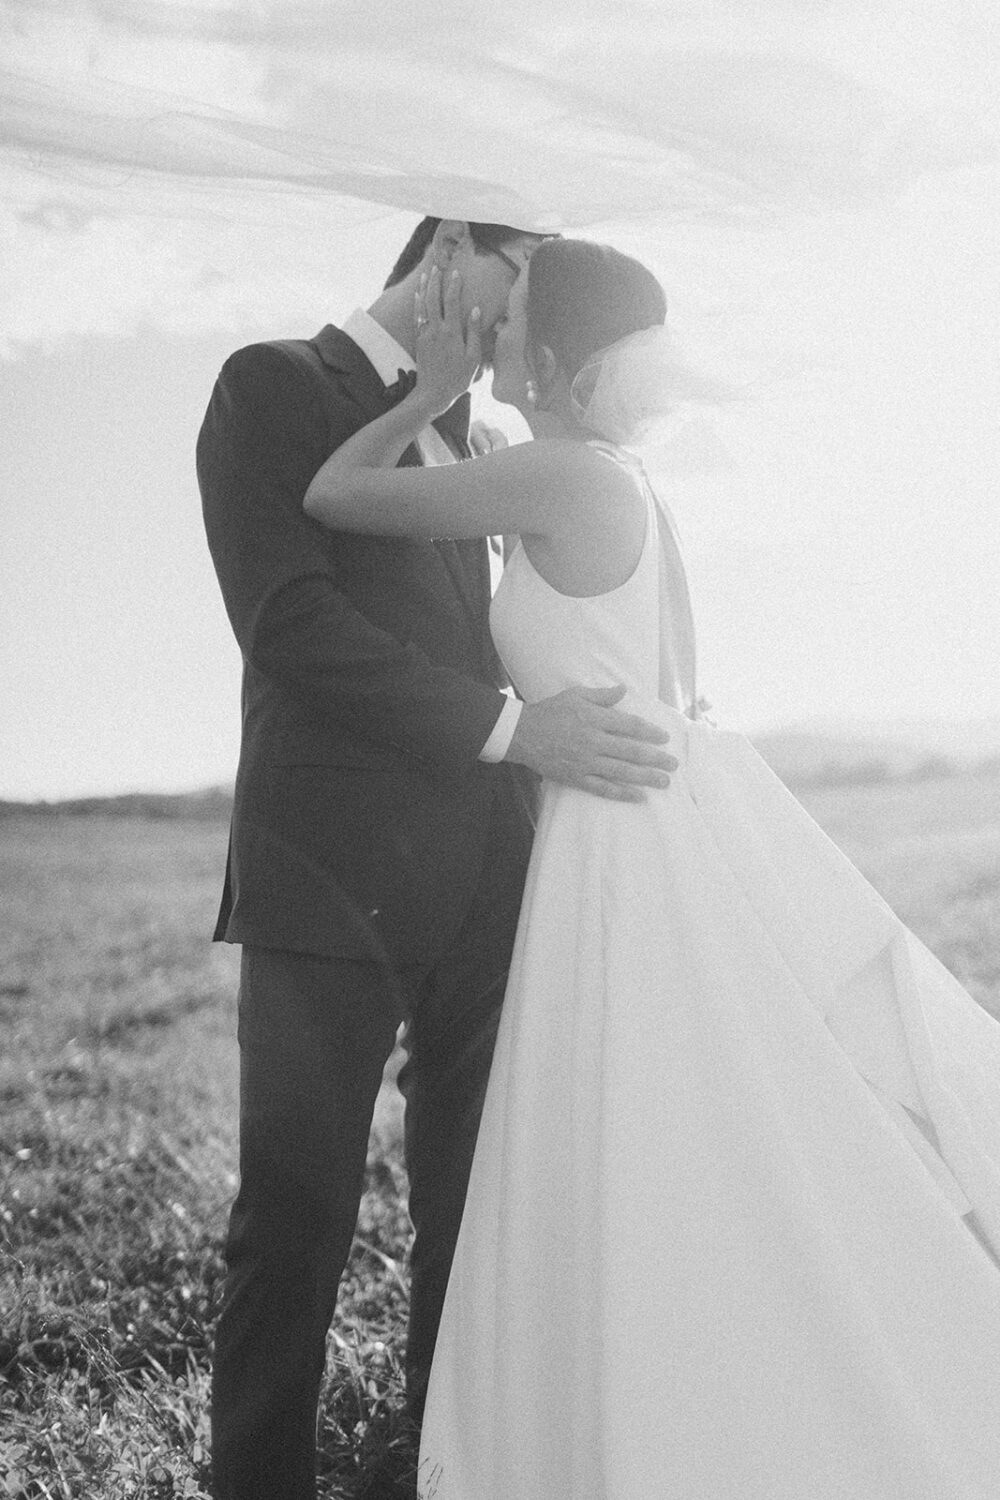 couple kisses under veil trying wedding photo poses